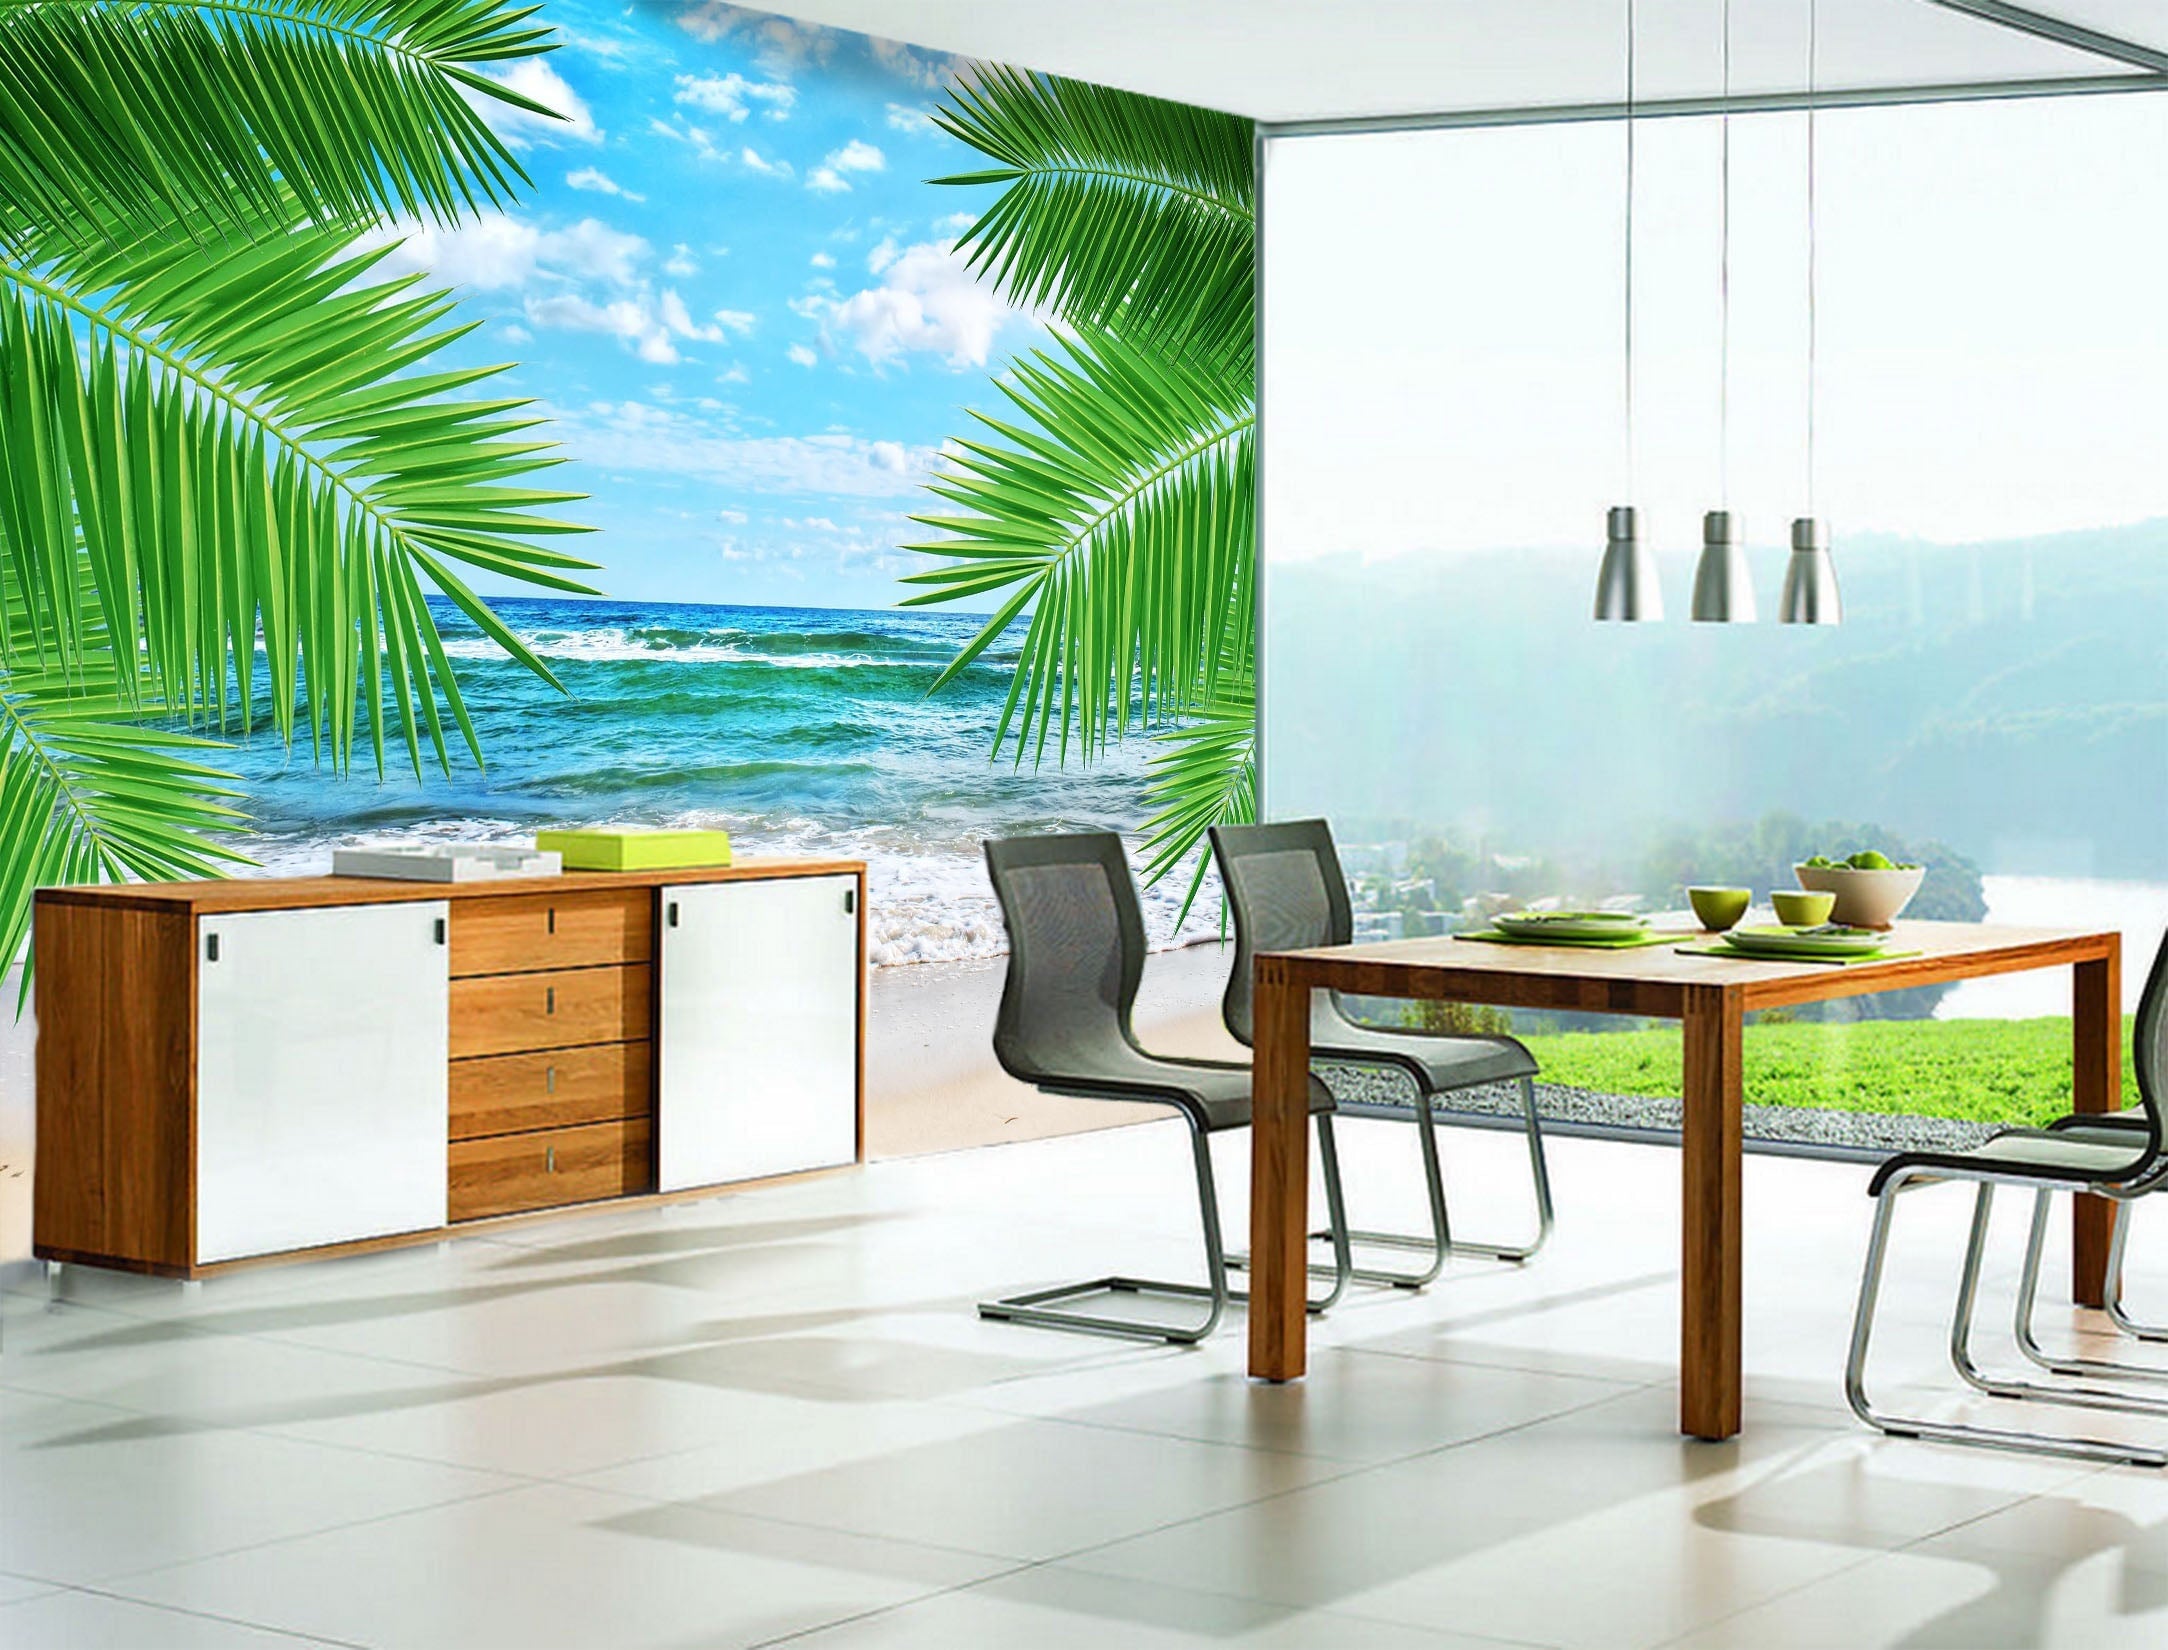 3D Sea Beach Coconut Tree 025 Wall Murals Wallpaper AJ Wallpaper 2 